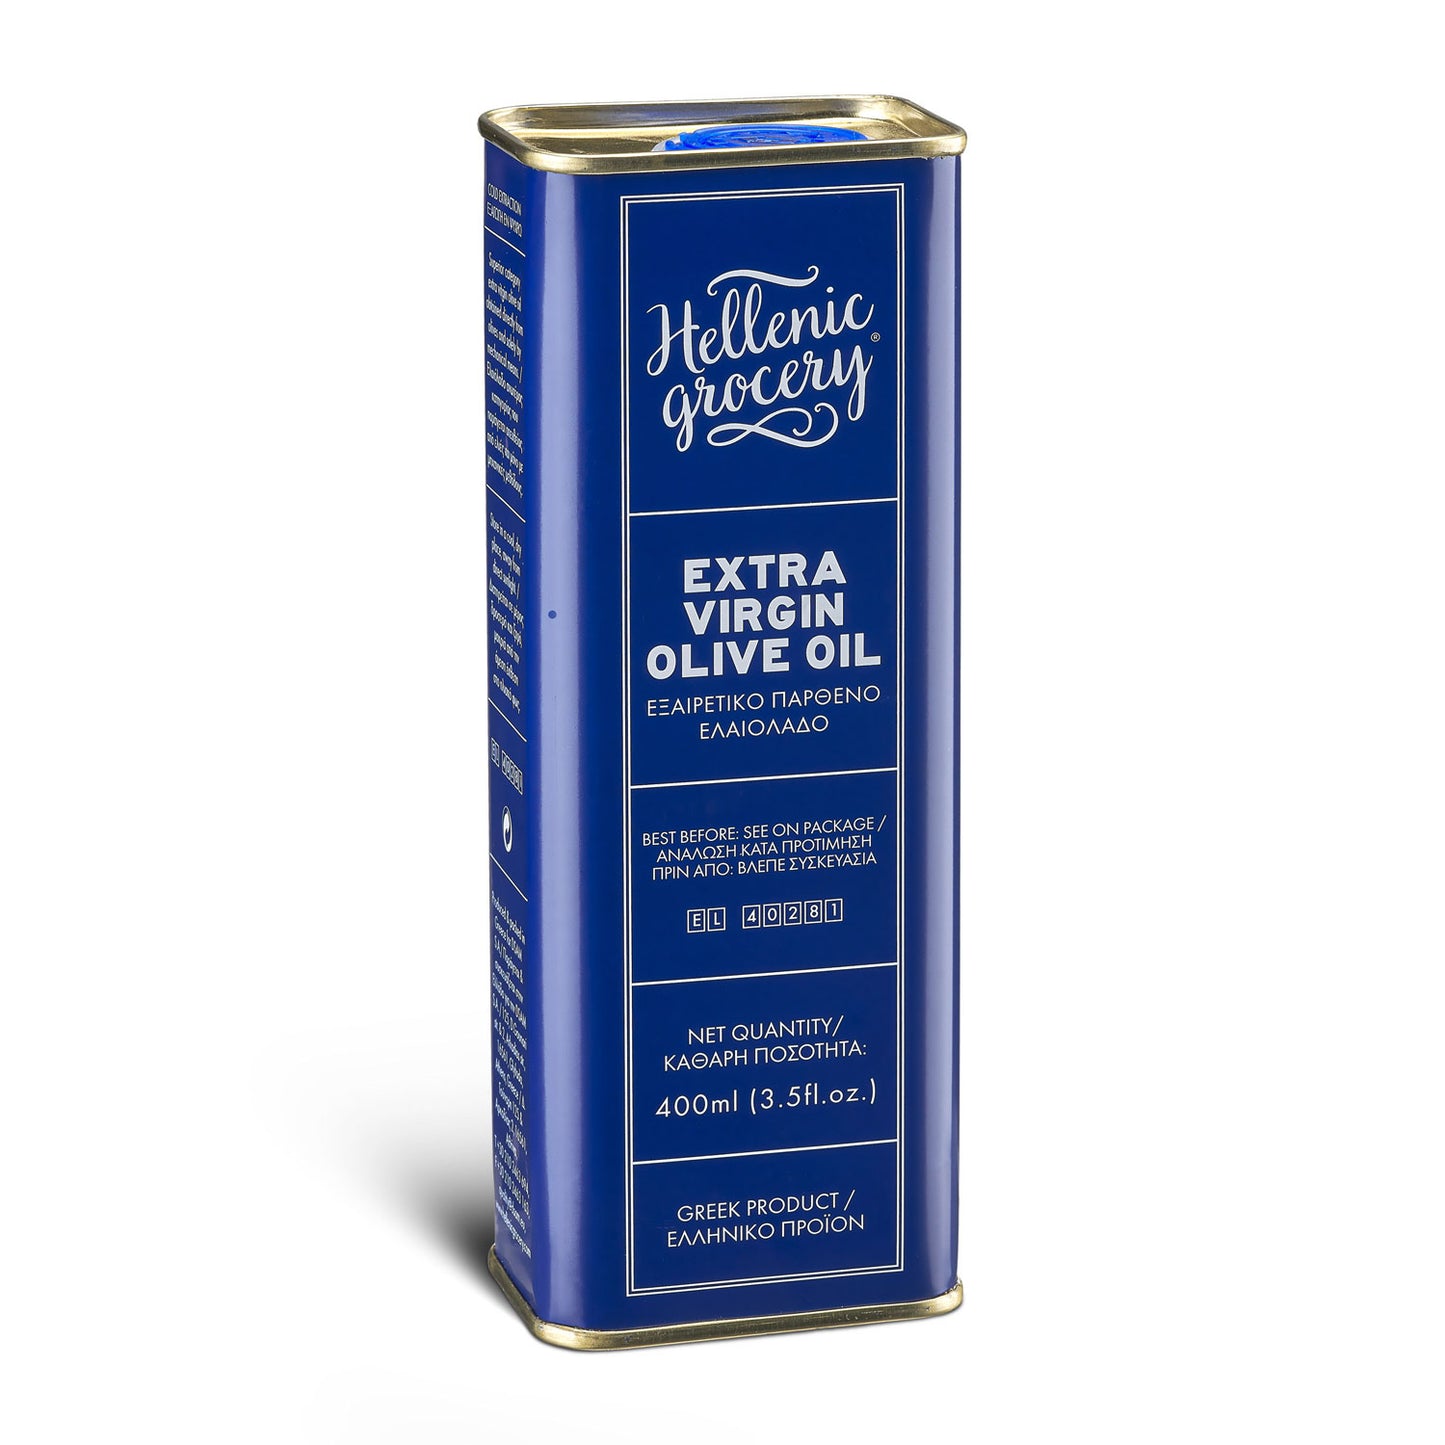 Olio Extravergine di Oliva BLUE - 400ml - Hellenic Grocery